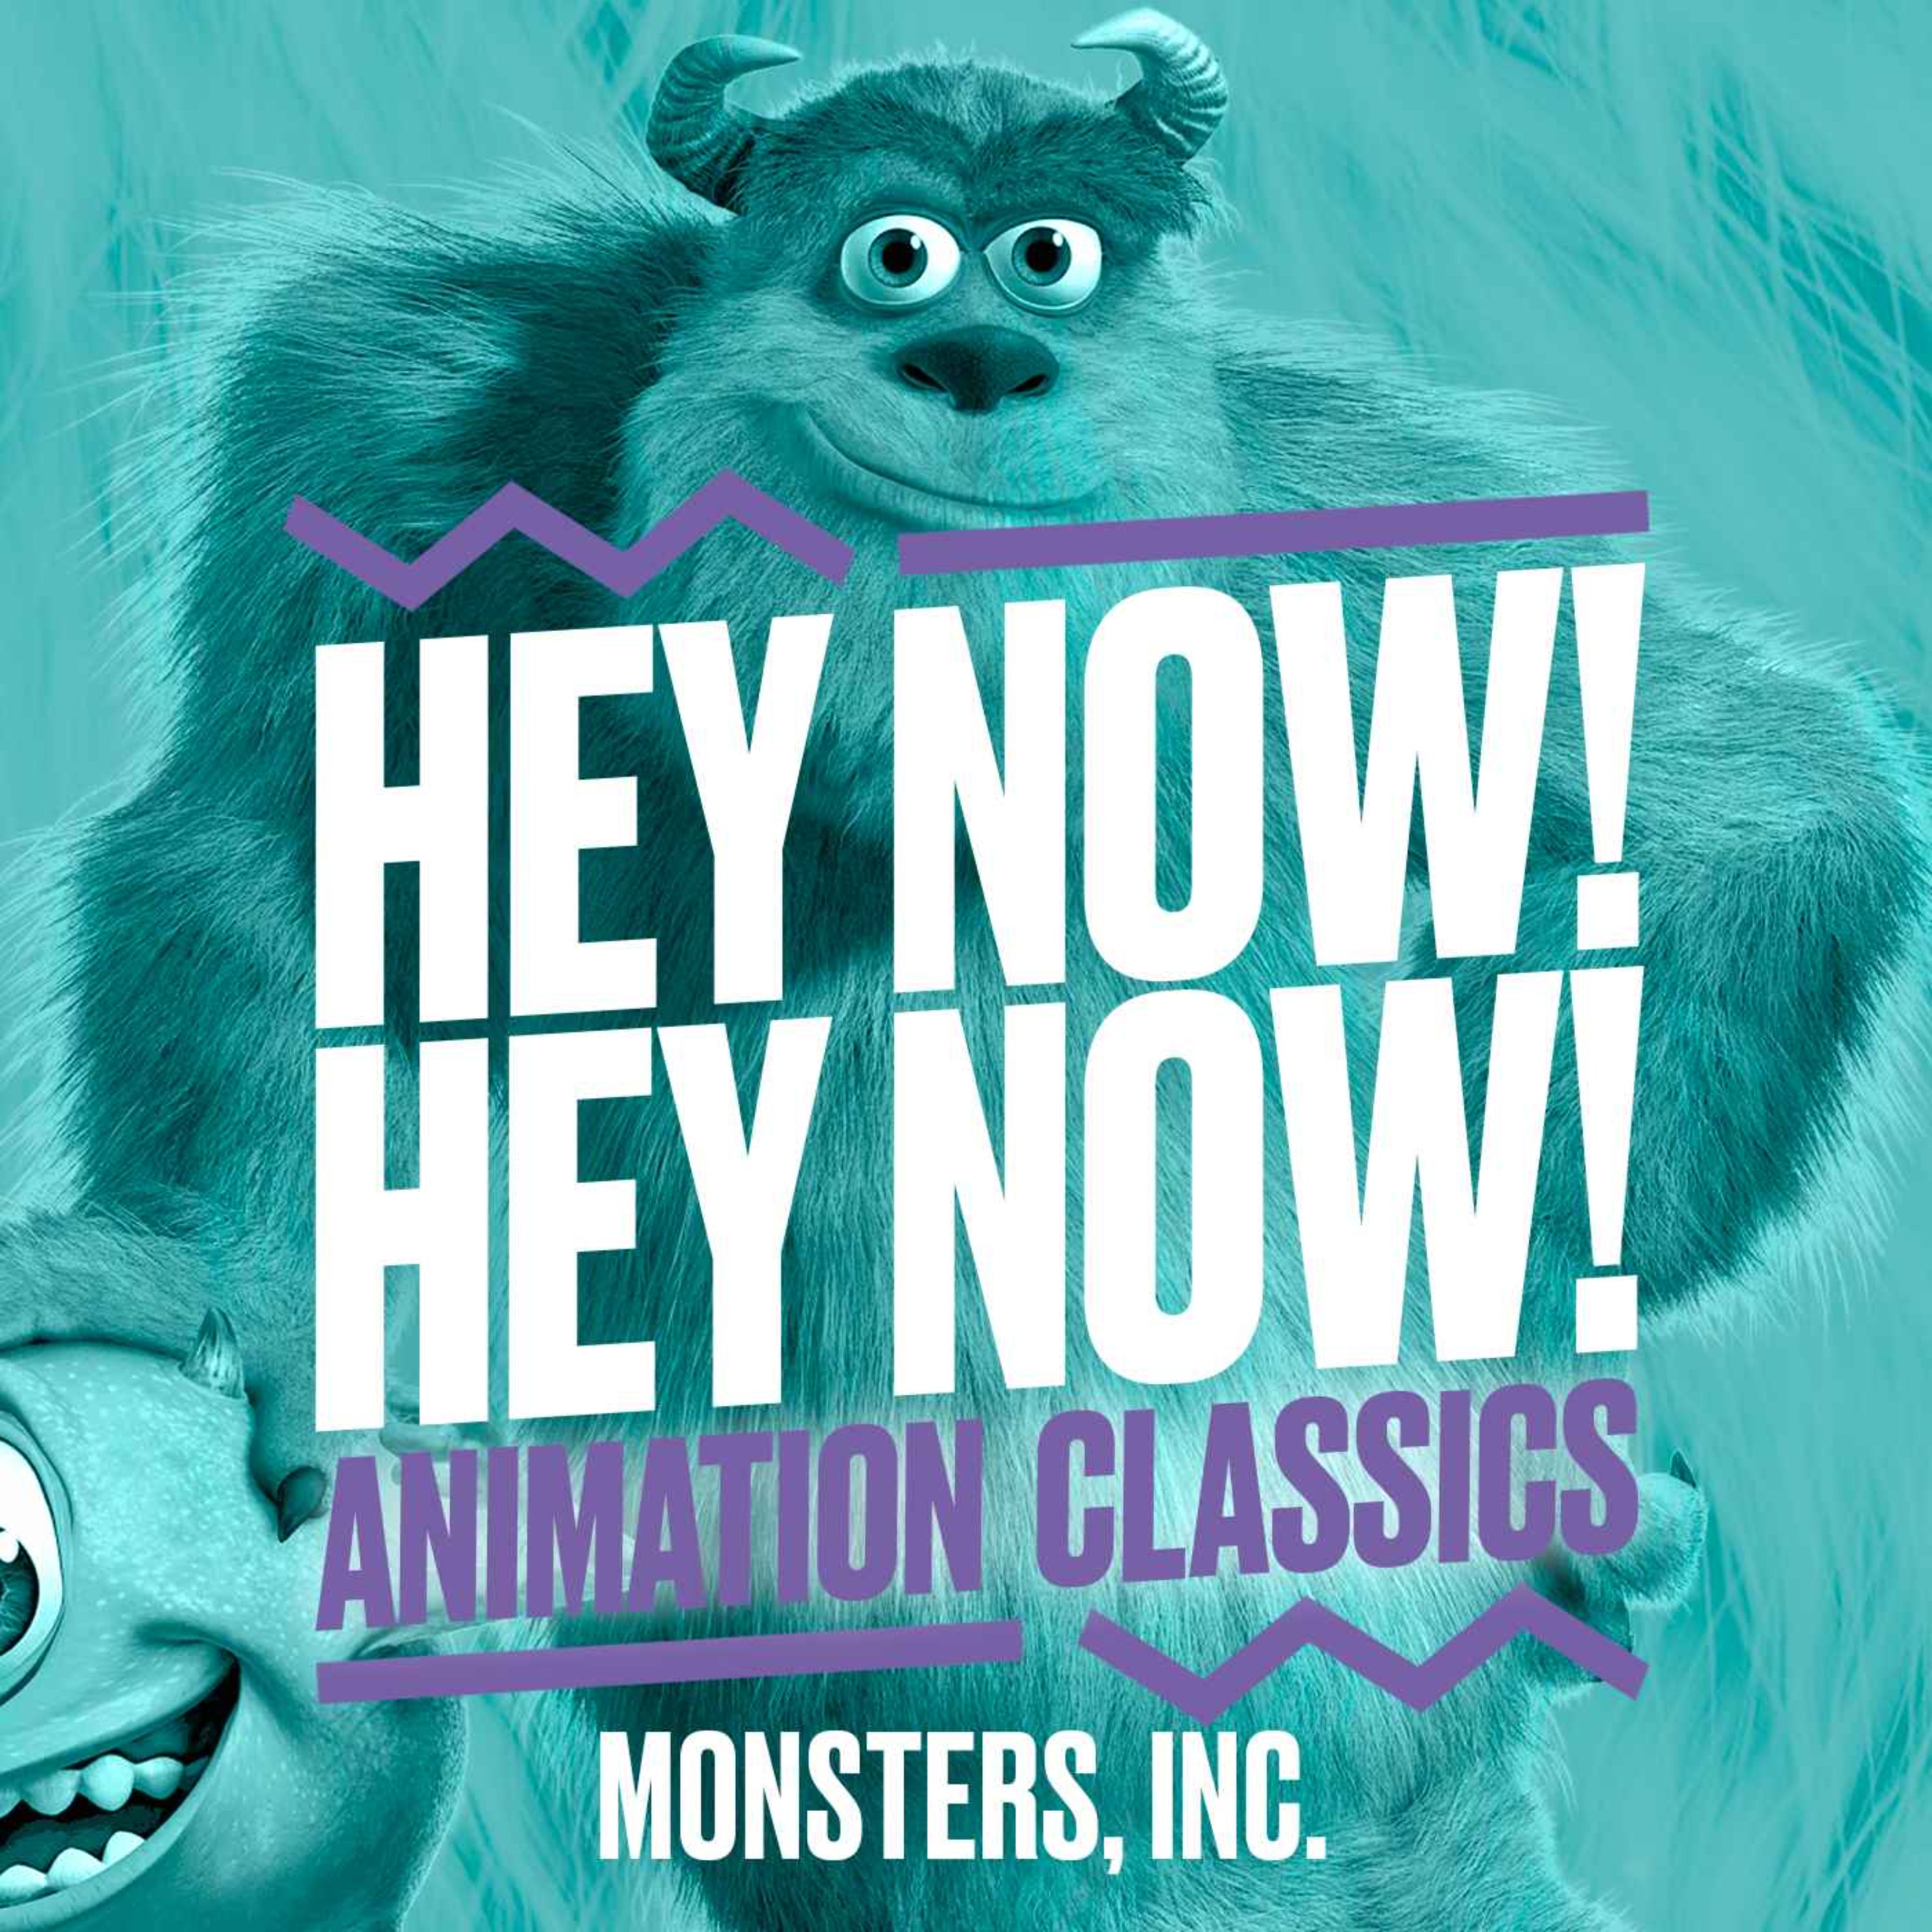 Animation Classics: Monsters, Inc.